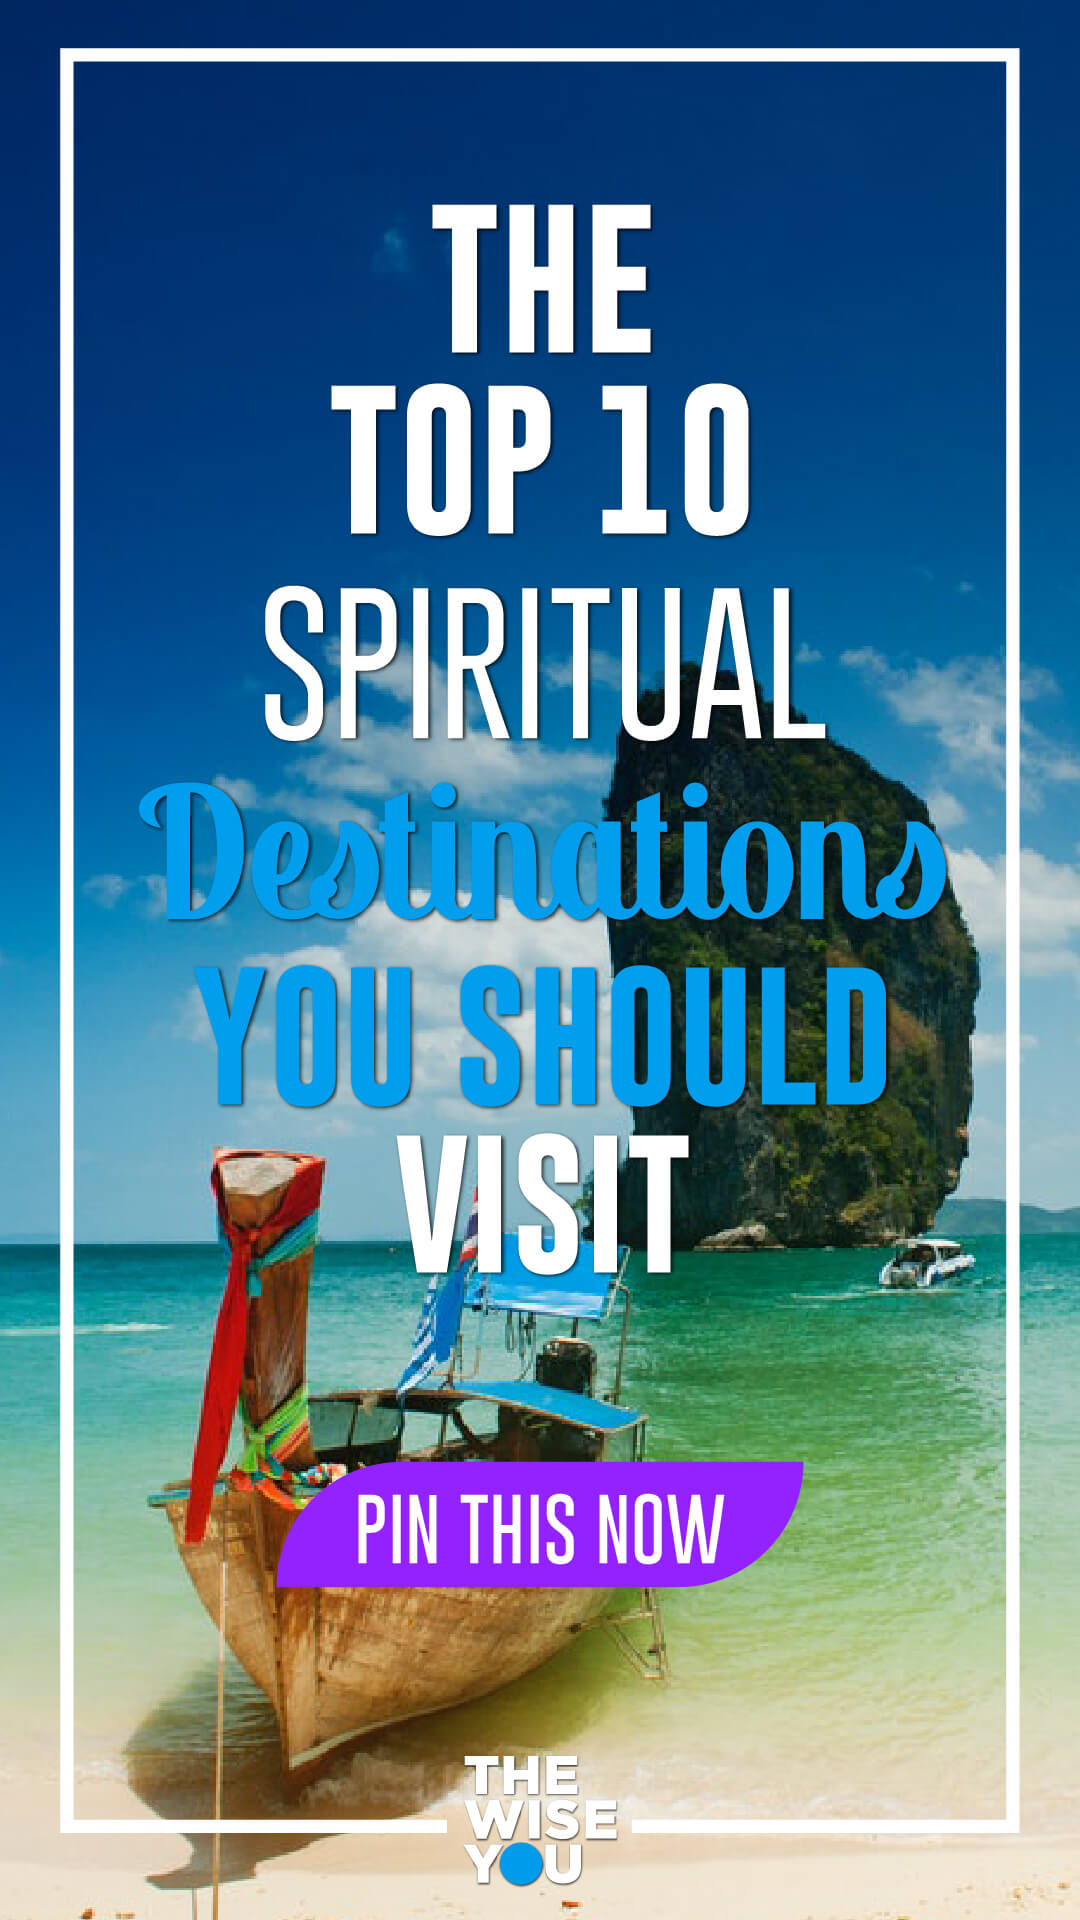 The Top 10 Spiritual Destinations You Should Visit